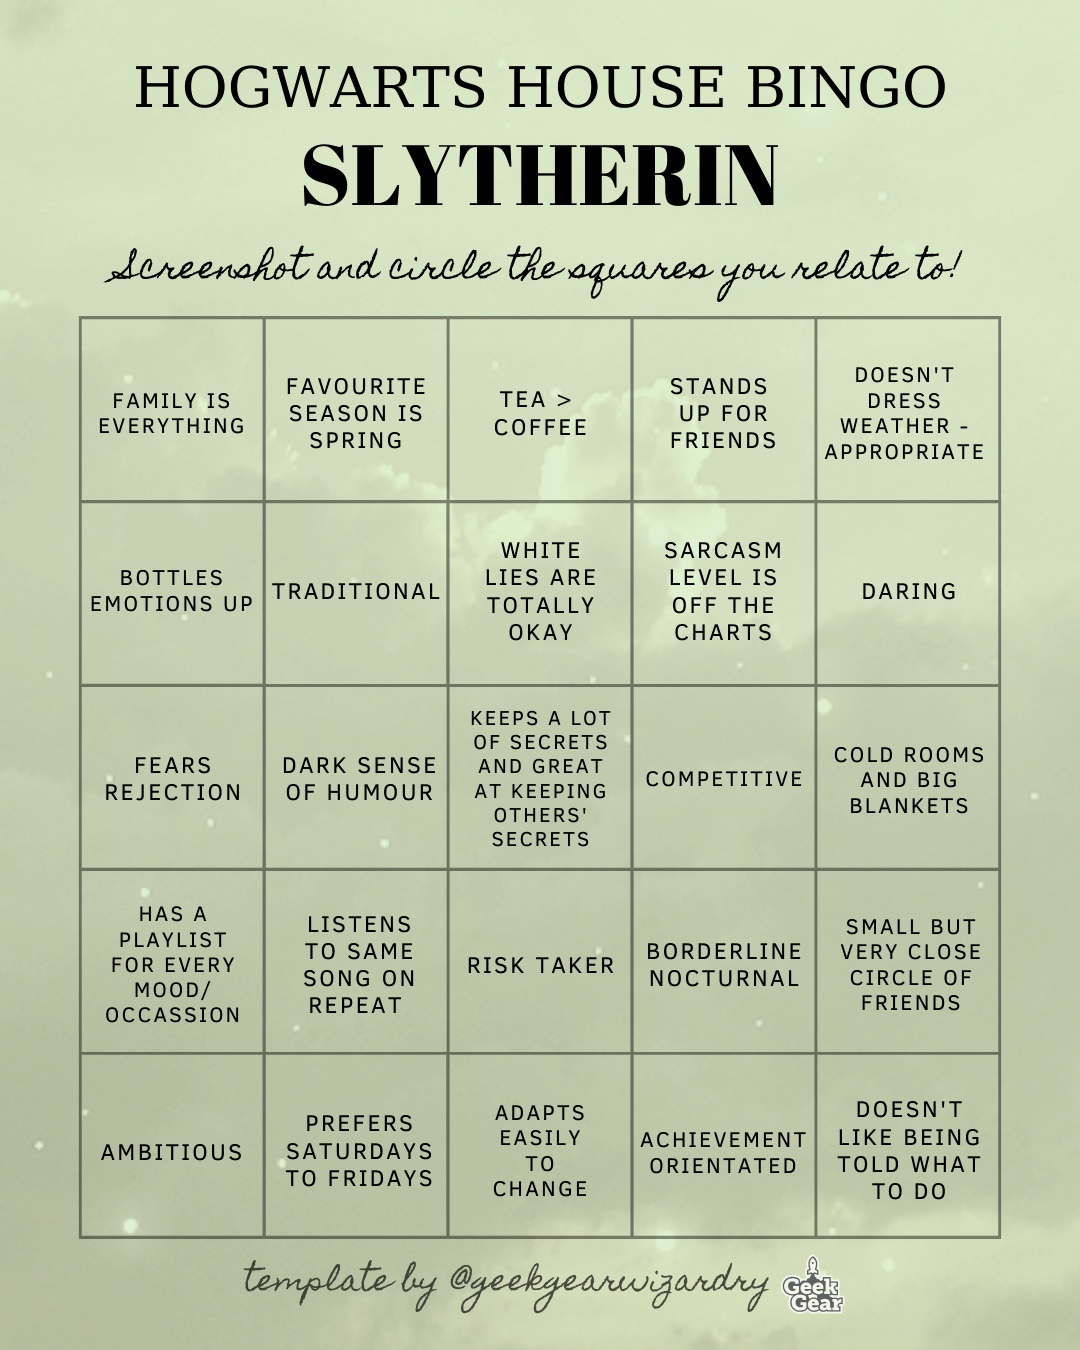 Slytherin traits